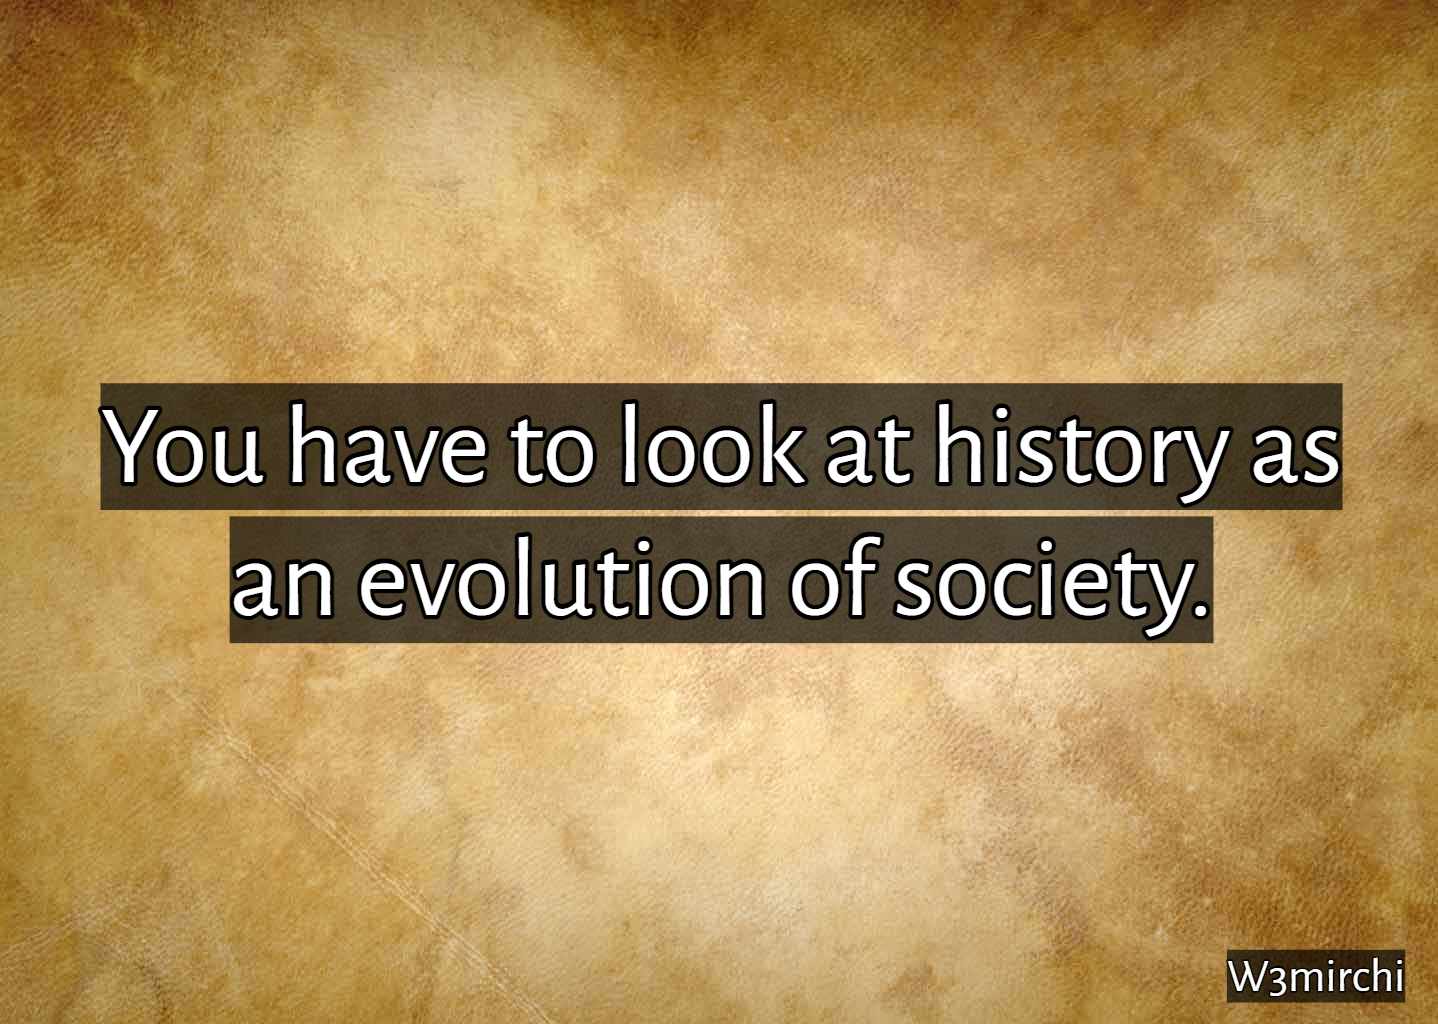 Historical Quotes ऐतिहासिक कोट्स